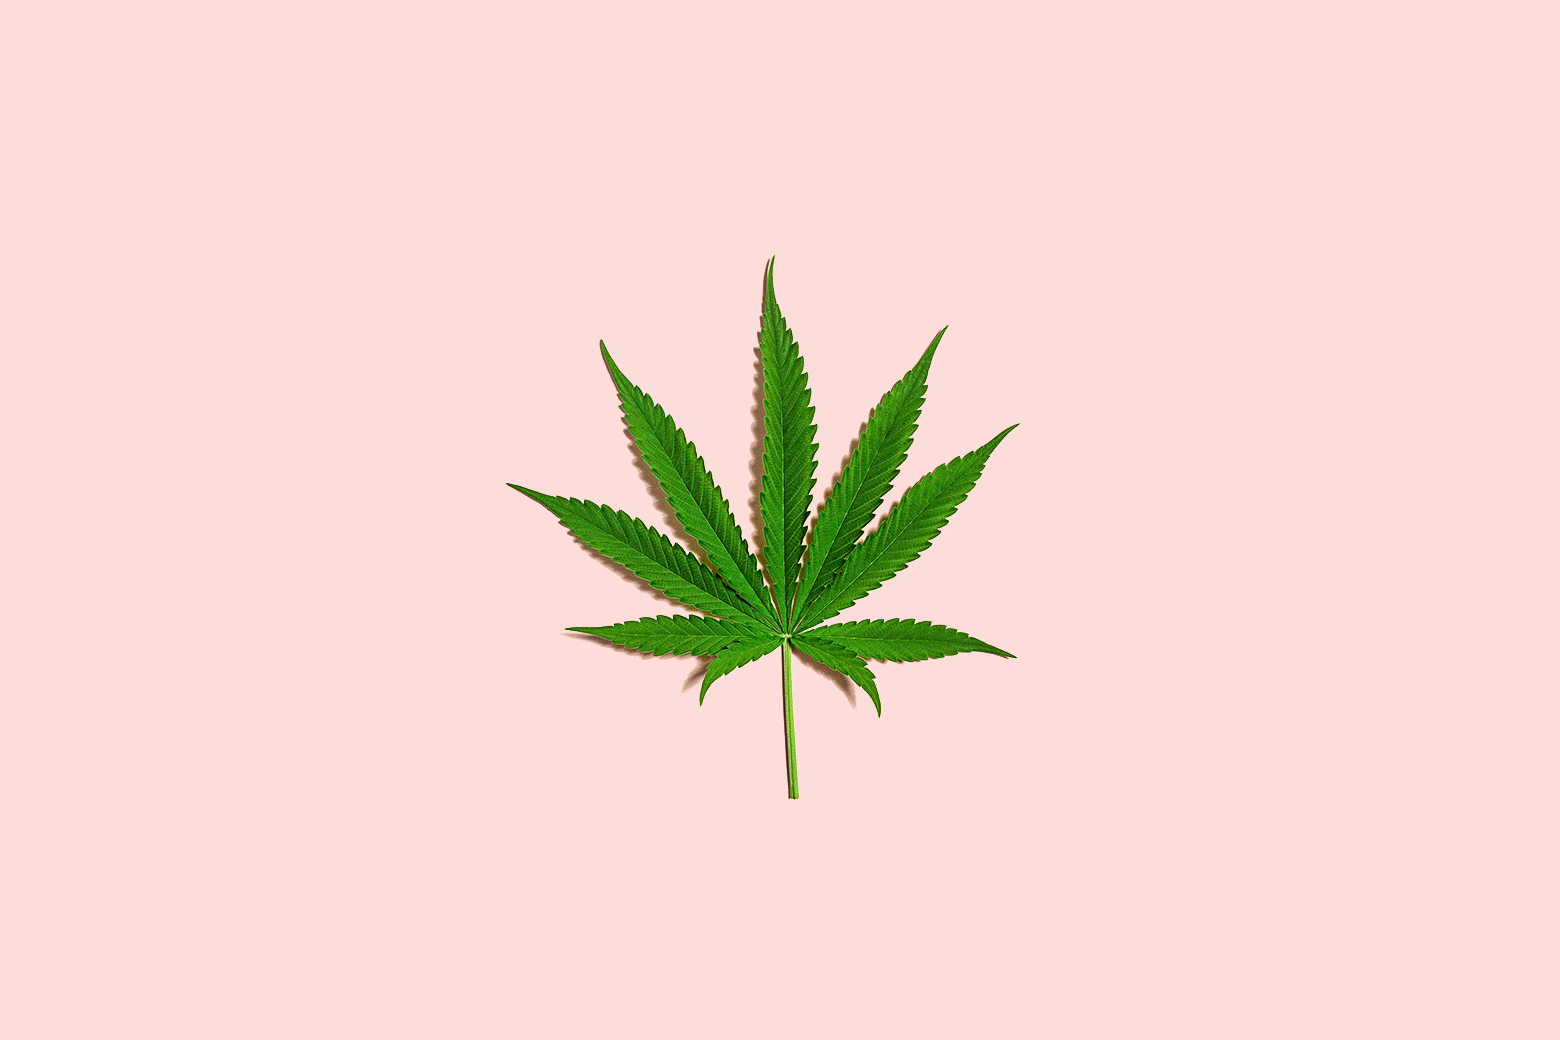 A healthy cannabis leaf grows black against a pink background.